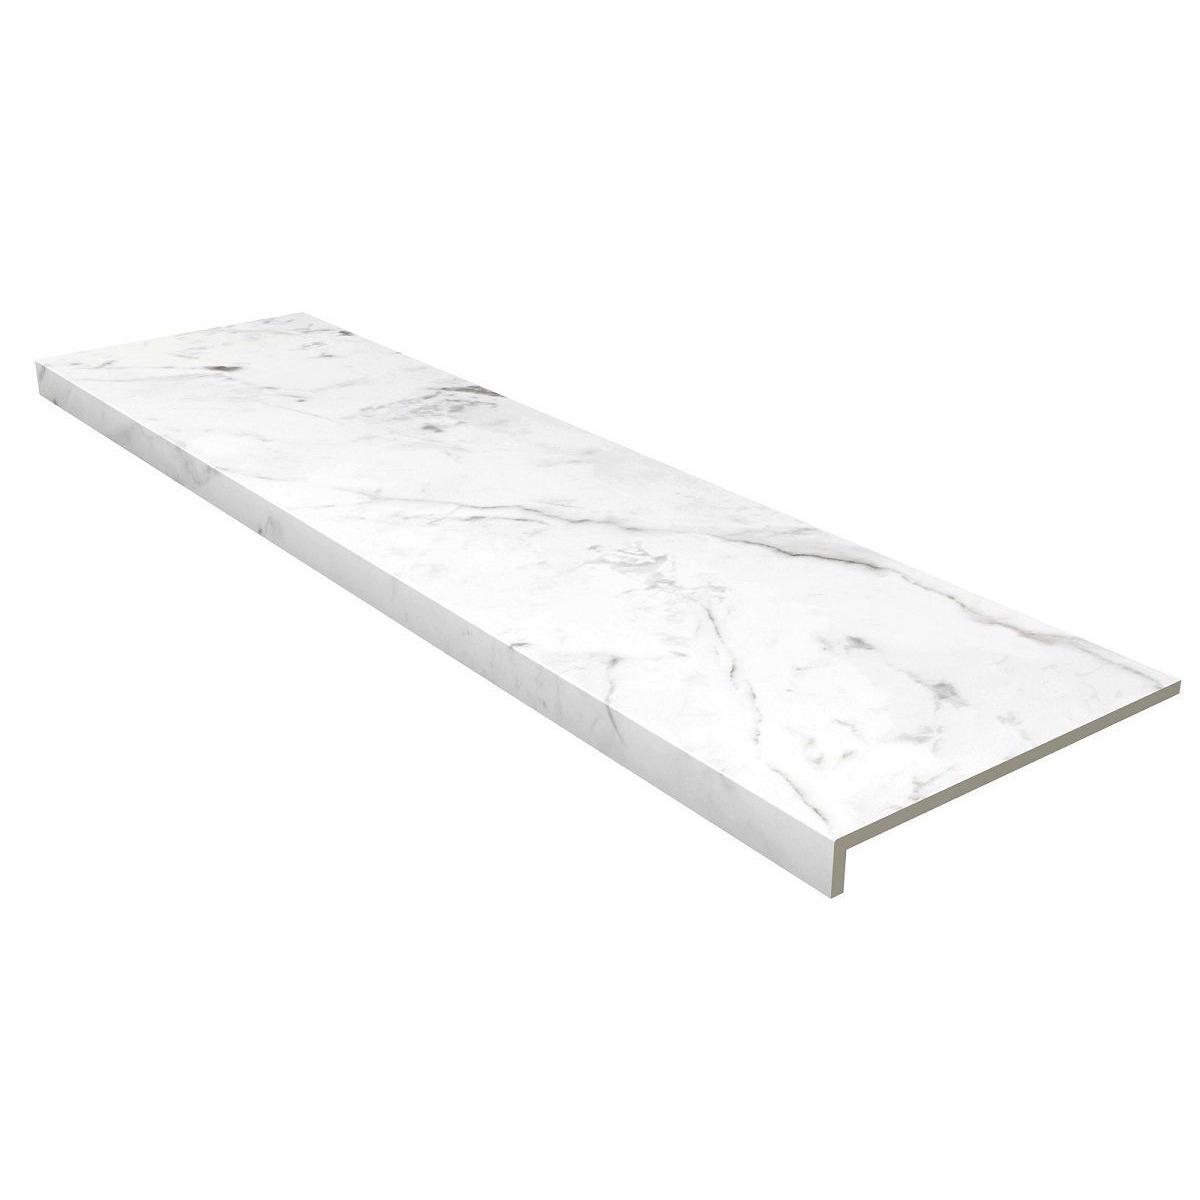 Gres de aragon ступень фронтальная marble anti-slip rect. Carrara blanco 31,5х119,7 20